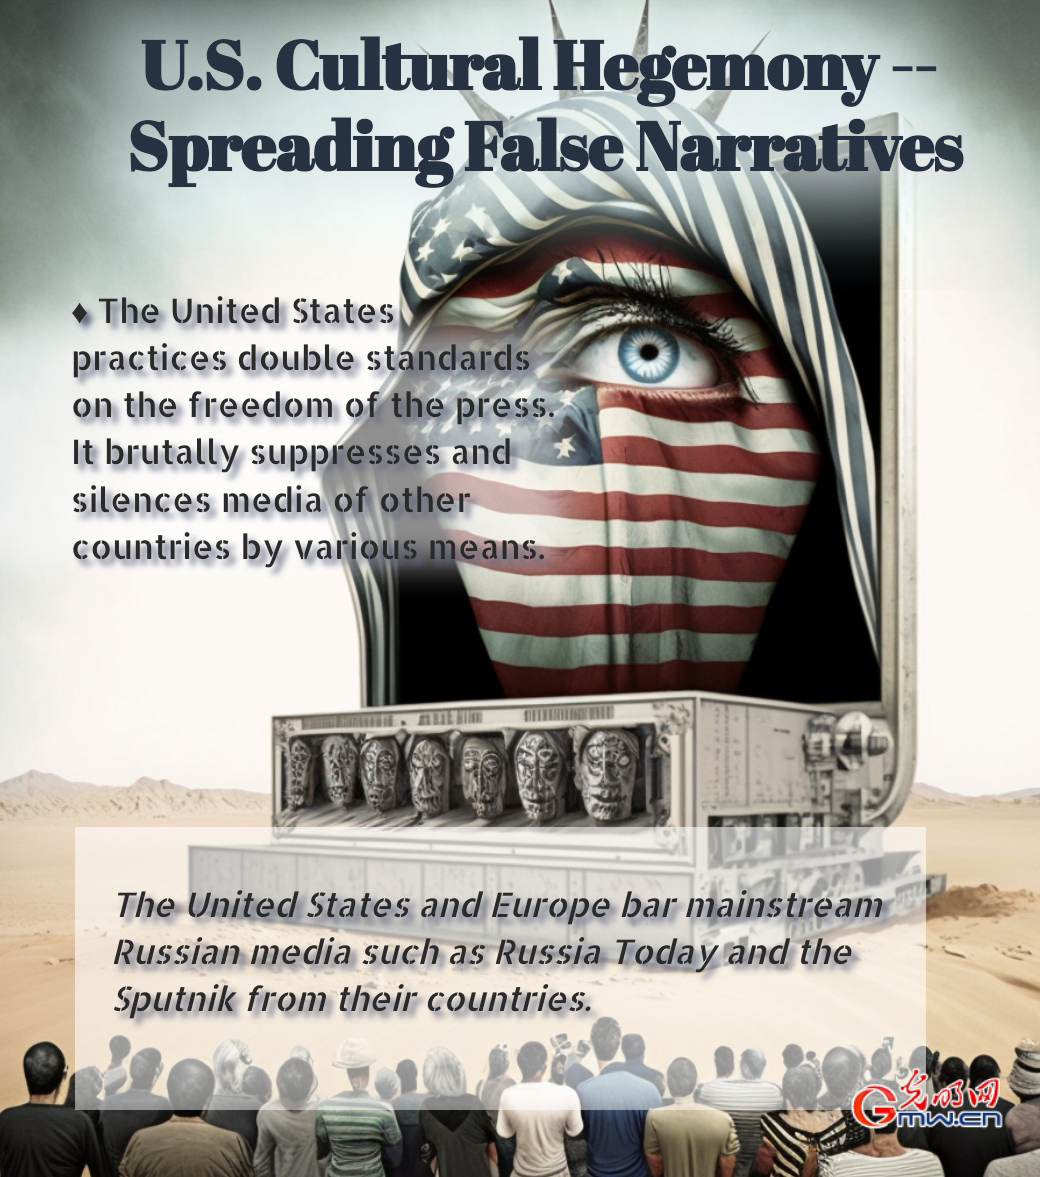 U.S. Cultural Hegemony -- Spreading False Narratives